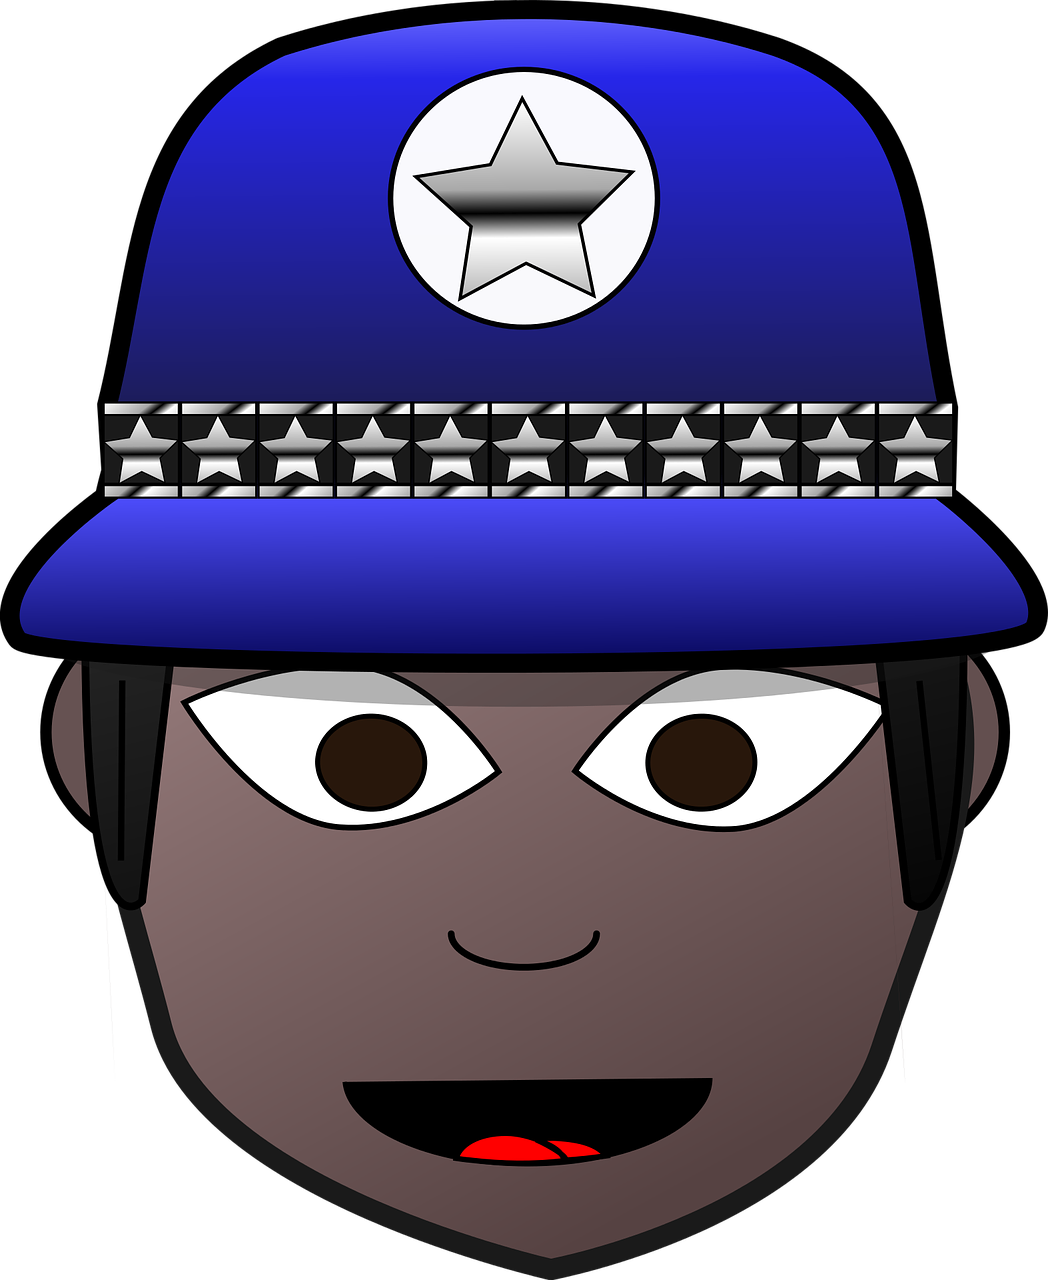 Download Cartoon Police Officer Portrait | Wallpapers.com